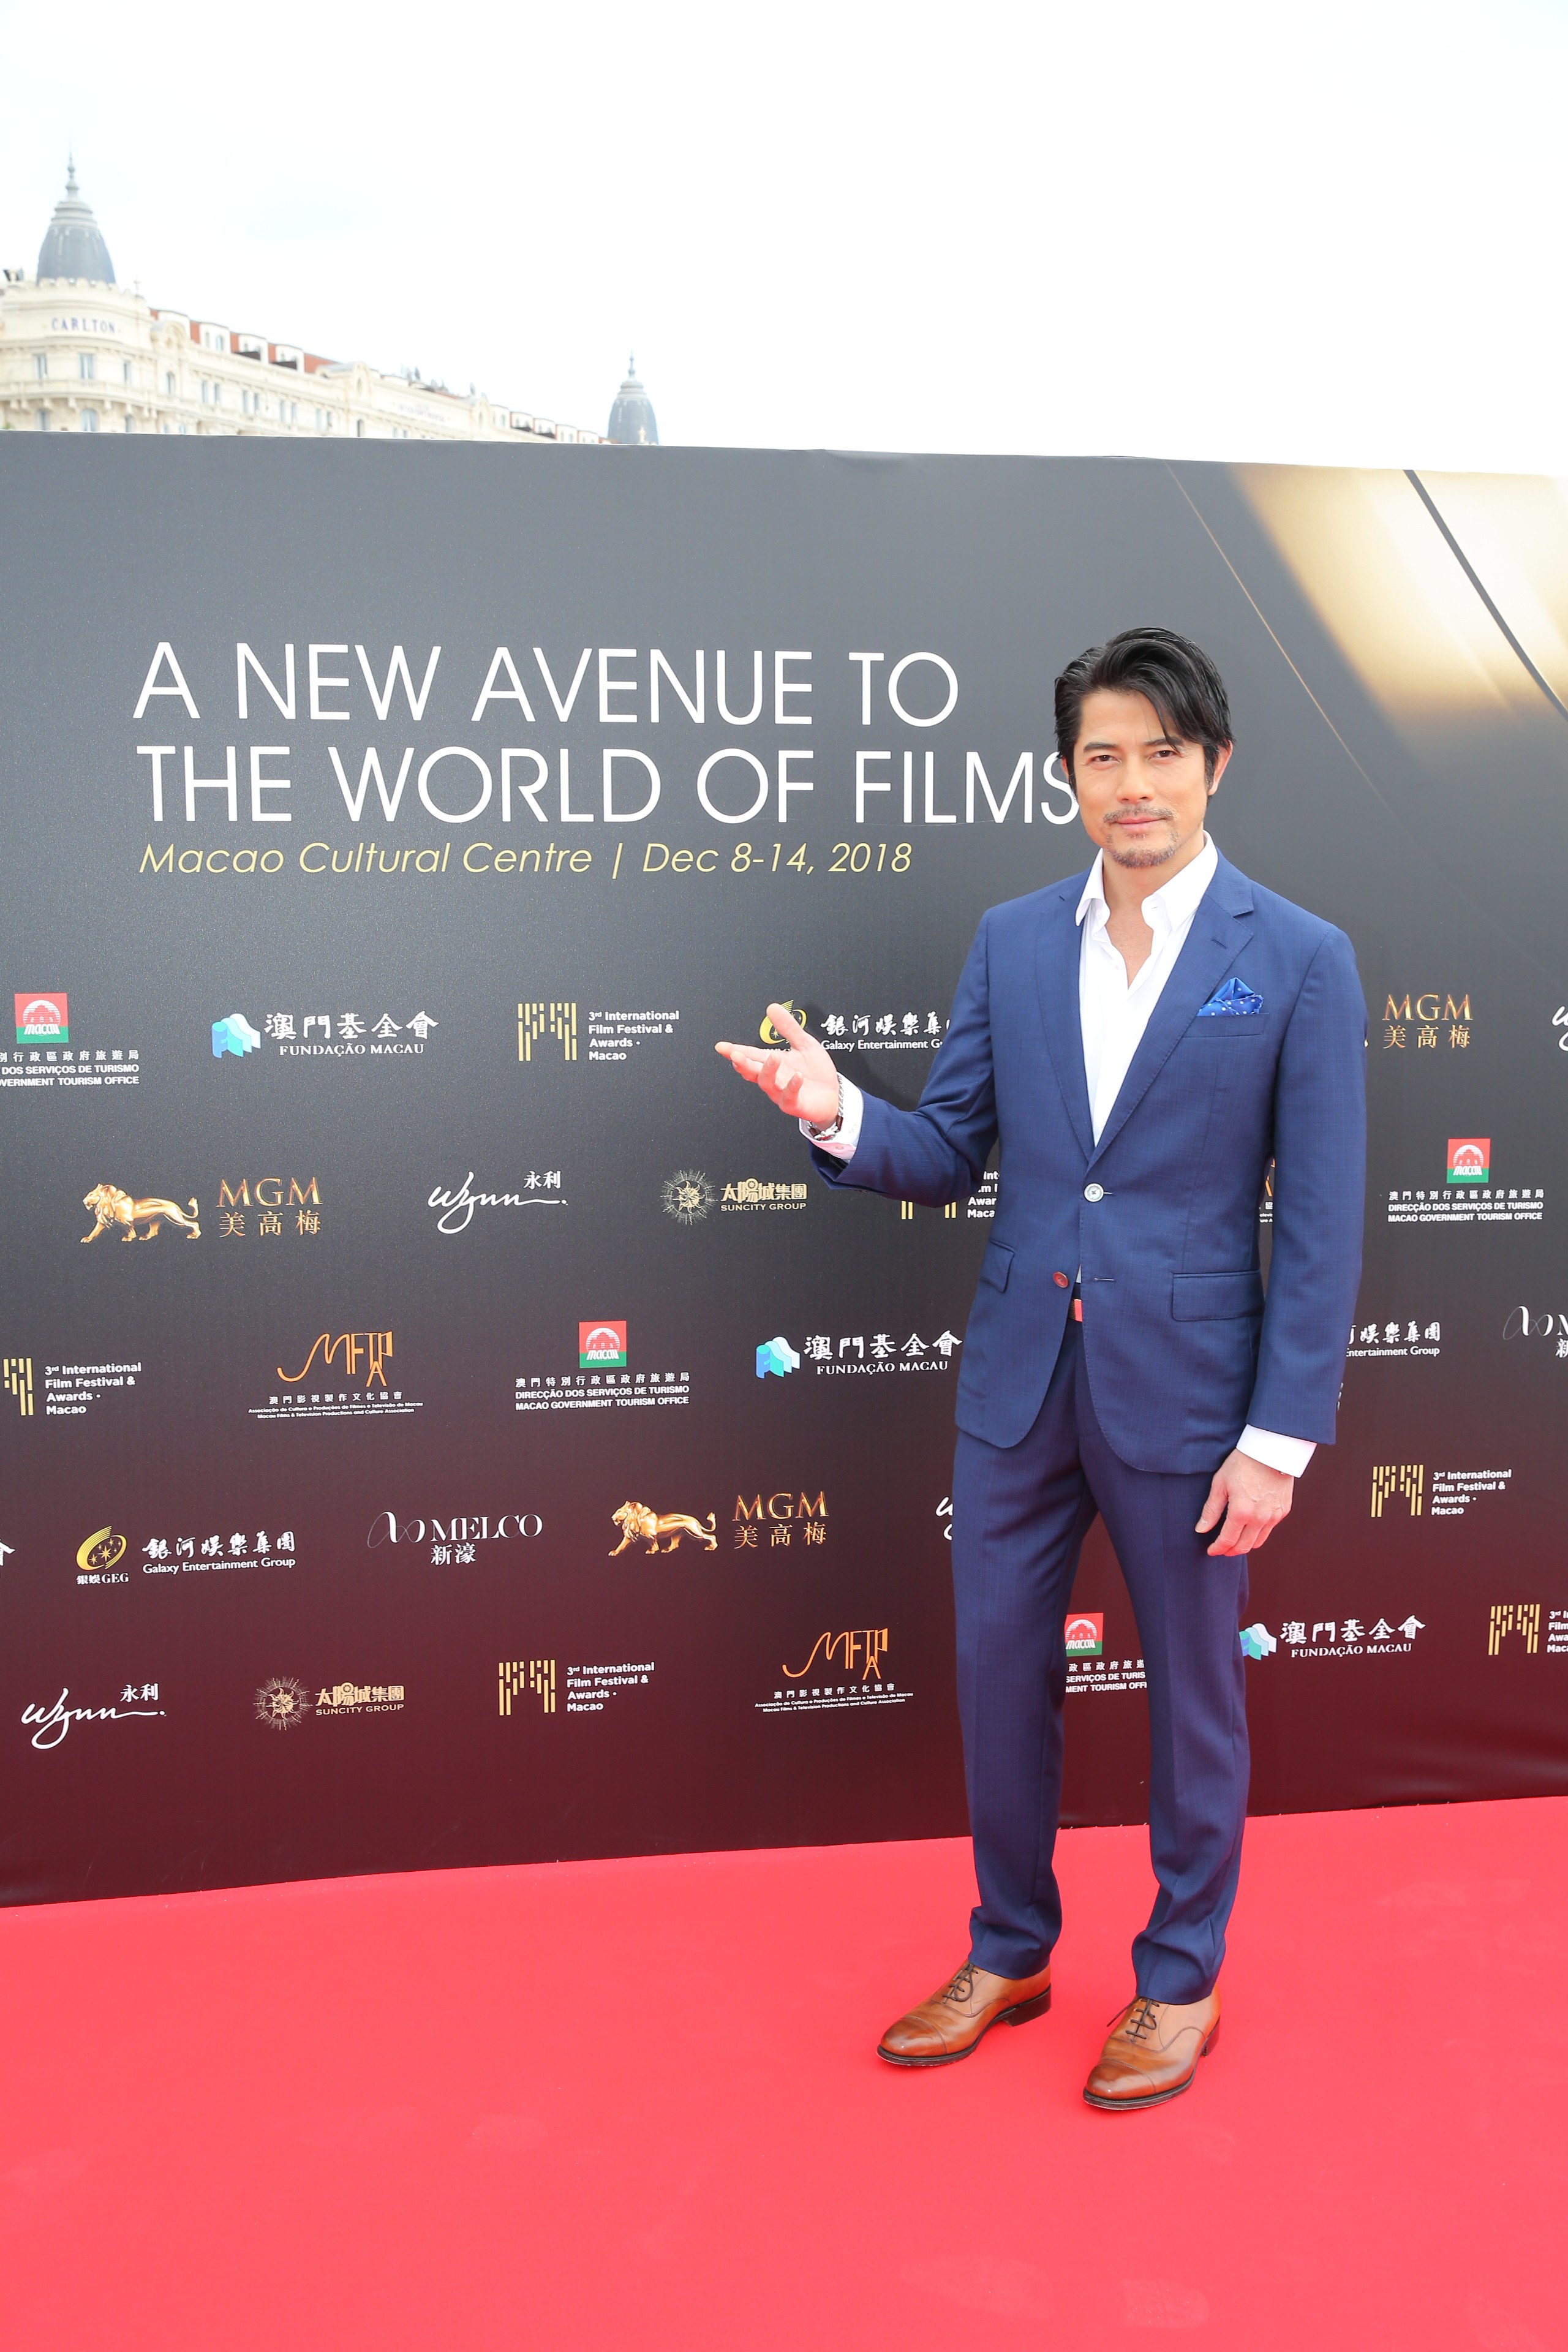 Hong Kong star Aaron Kwok is one of Macau’s International Film Festival & Awards’ Talent Ambassadors.